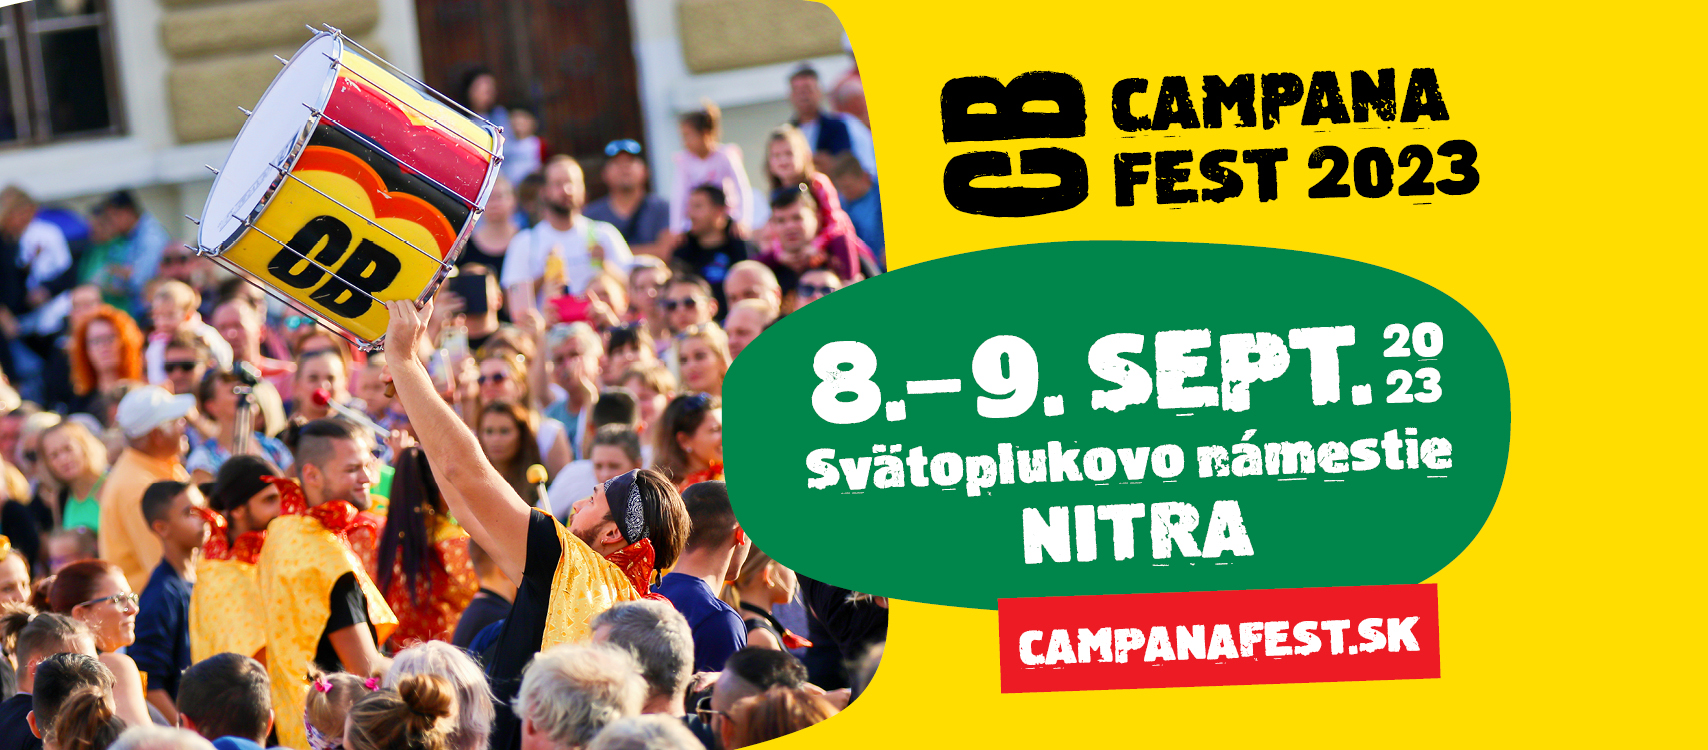 Campana Fest 2023